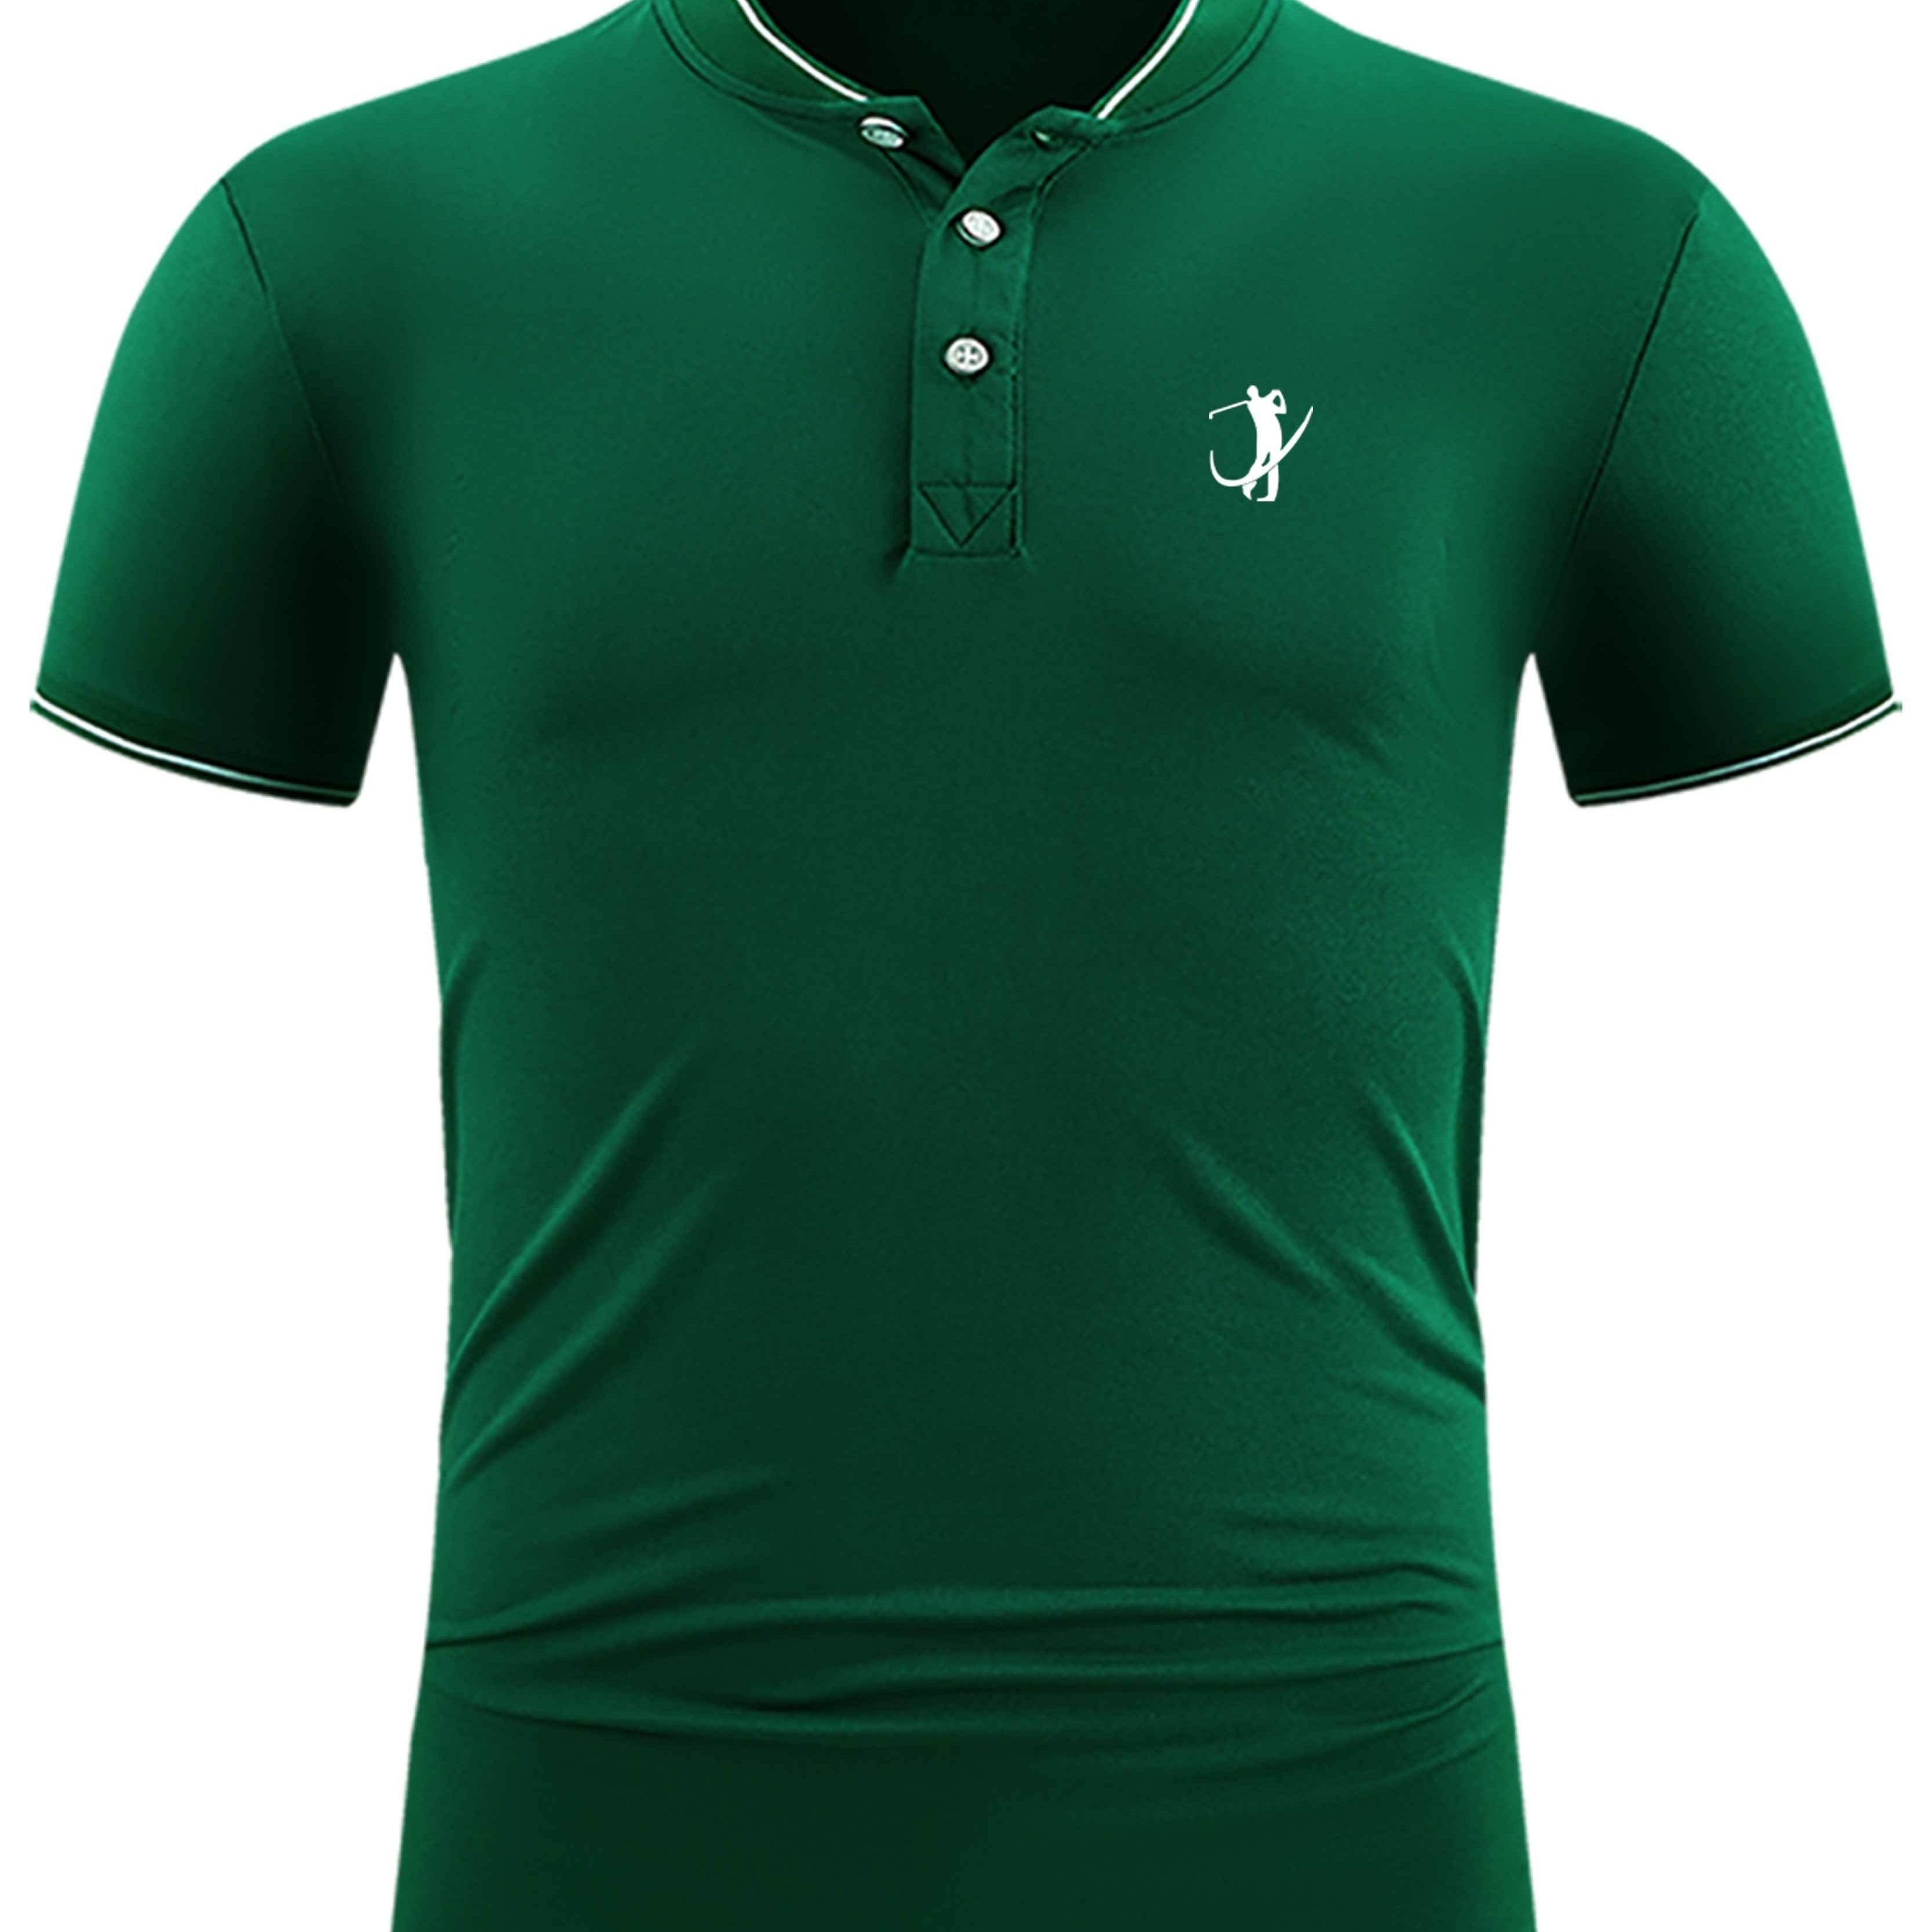 

Men's Golf Shirt, Golfing Print Short Sleeve Breathable Tennis Shirt, Business Casual, Moisture Wicking